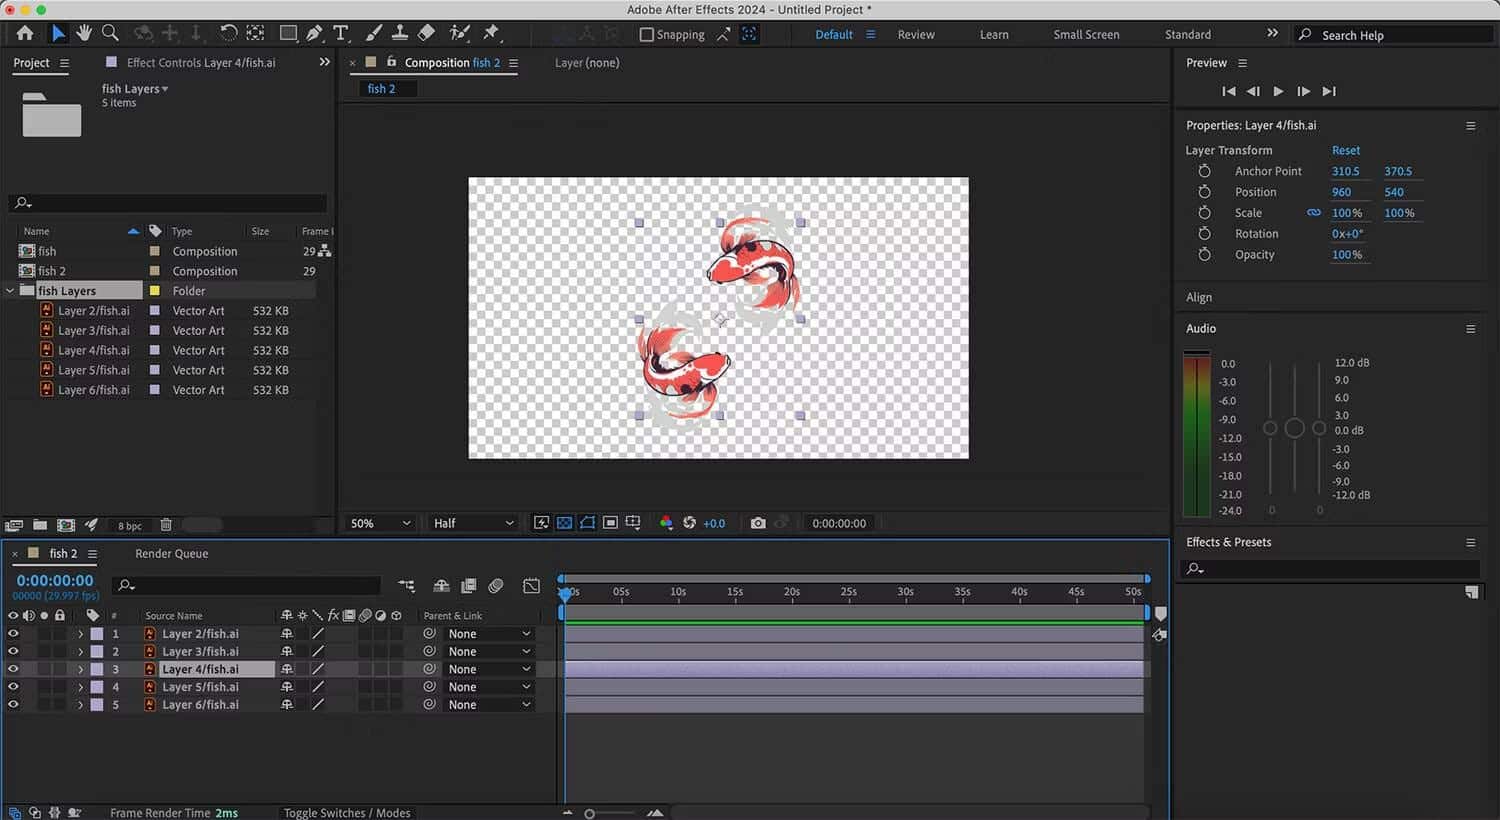 مراجعات | Adobe After Effects و Premiere Pro 2 | 1SDbhfuGTGa4O0uhJIWHyJg DzTechs